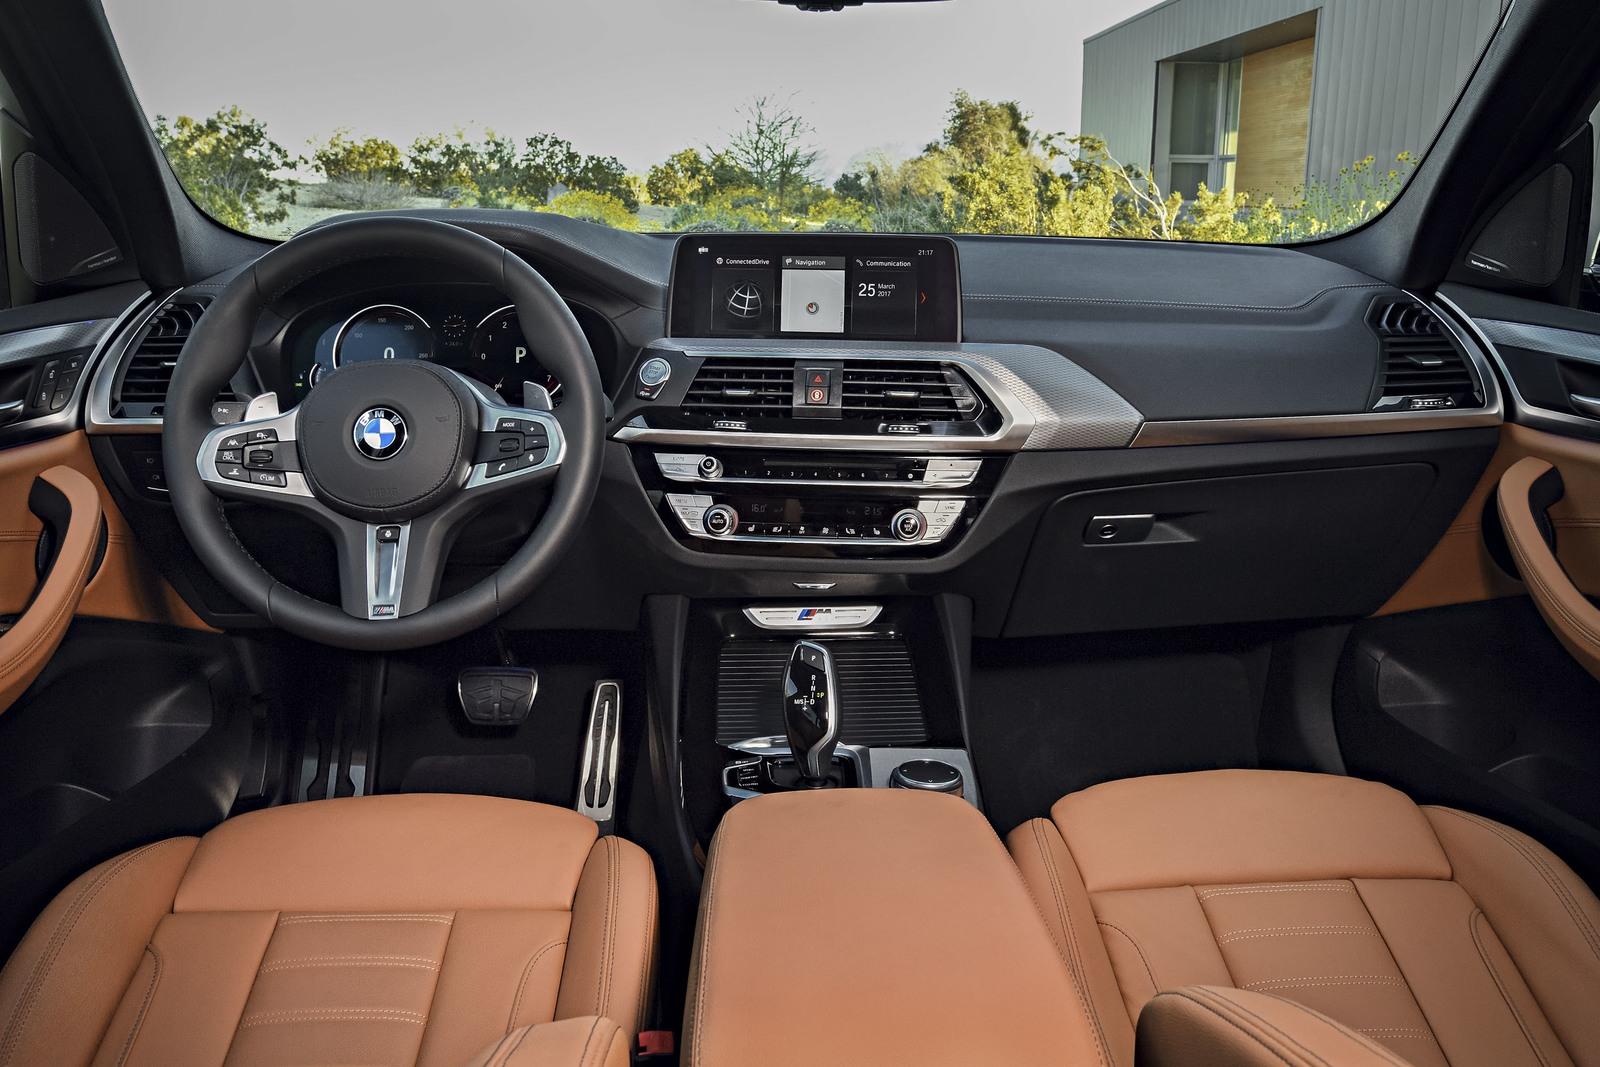 2019 BMW X3 M Interior